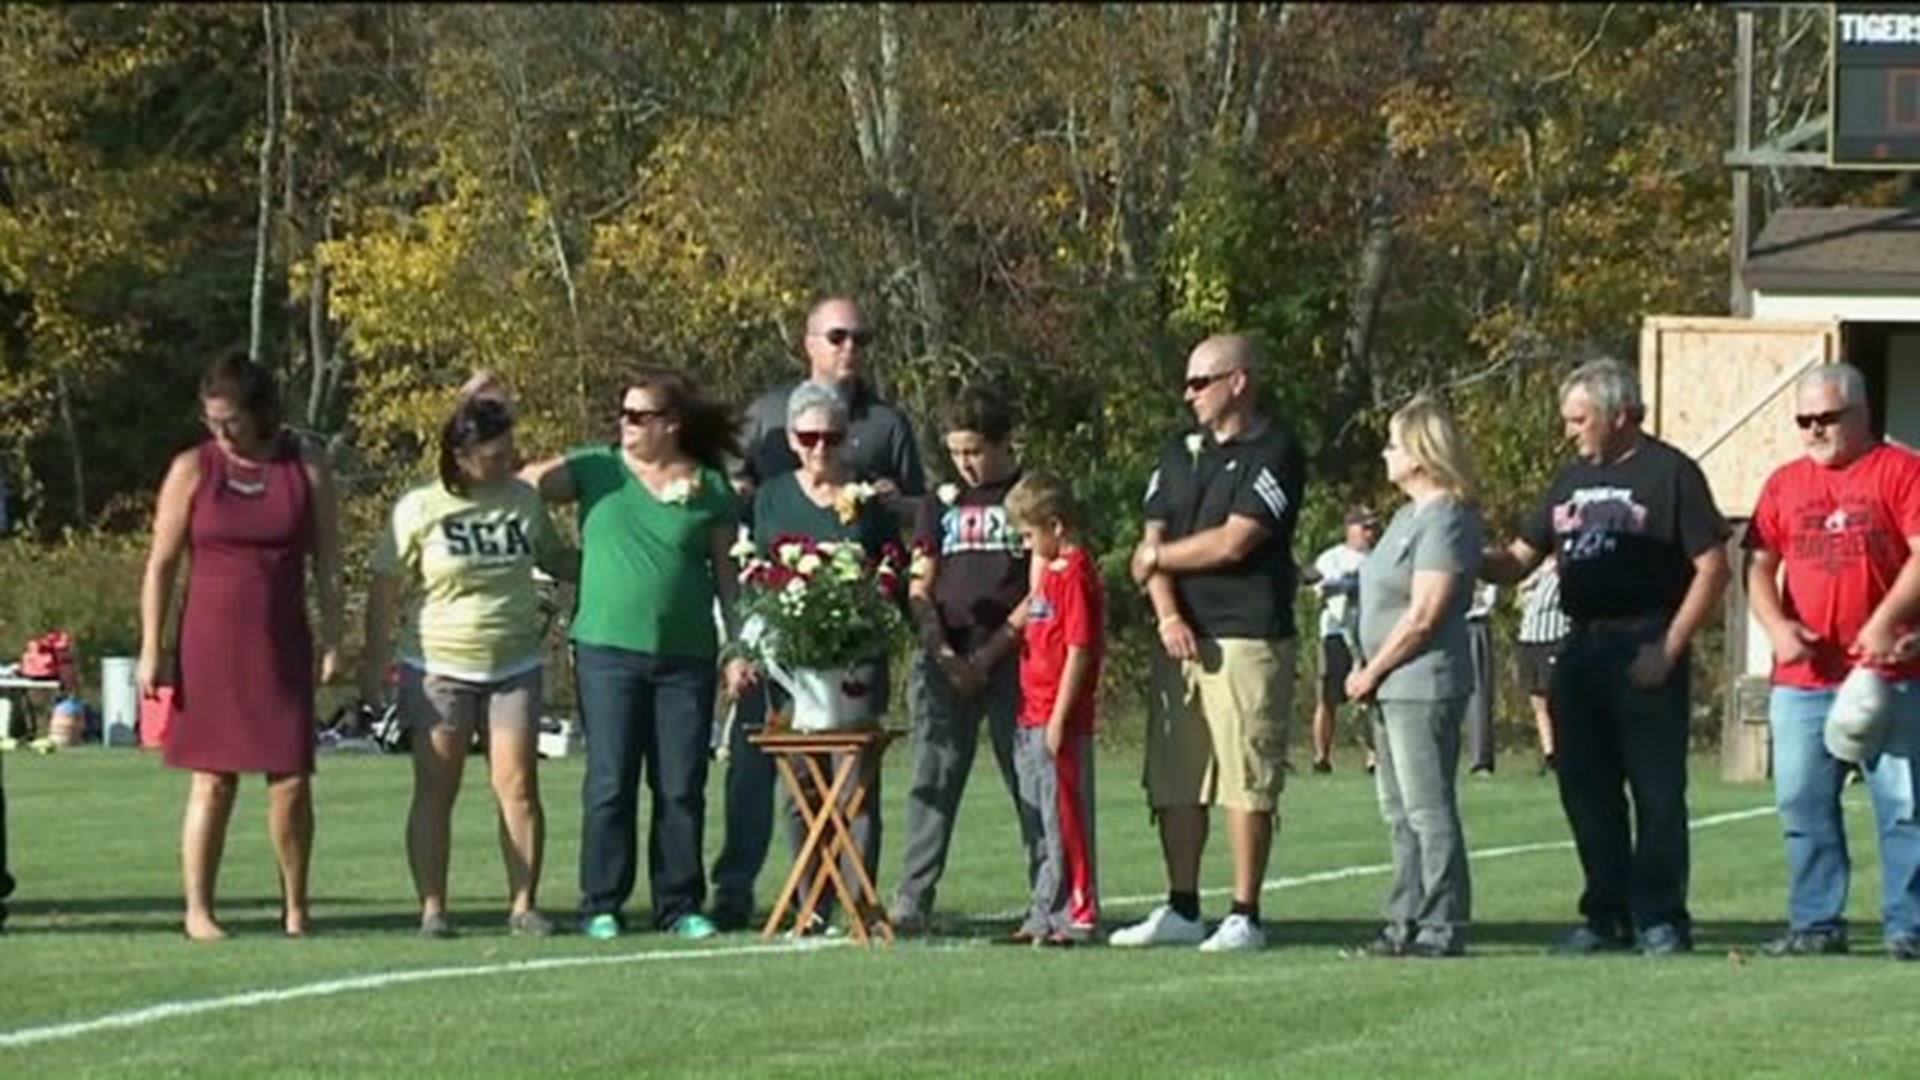 Field Hockey Team Honors Coach Killed In Weekend Fire Before Game